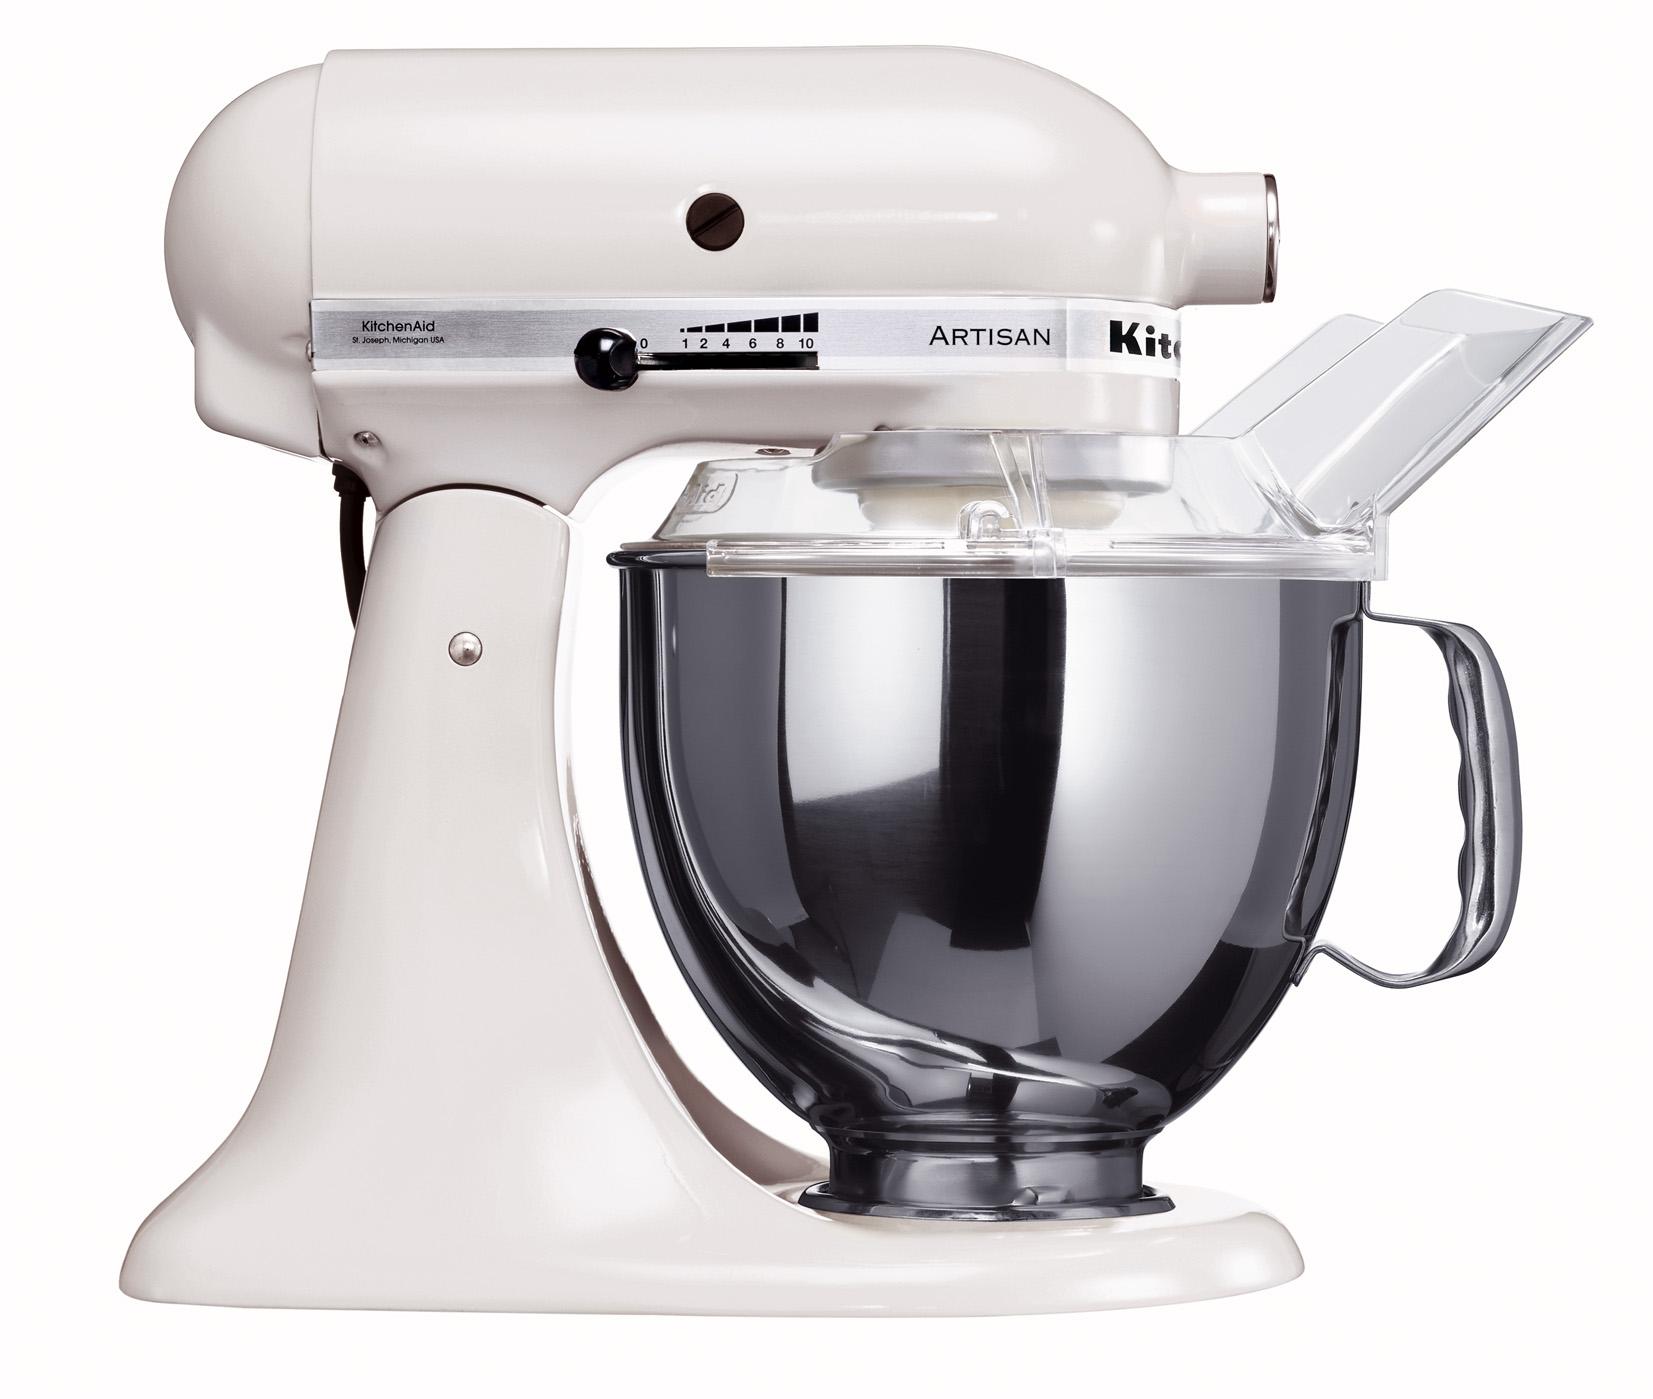 Foto KitchenAid Robot de Cocina Artisan blanco (H.Nr.: 5KSM150PSEWH) foto 306155